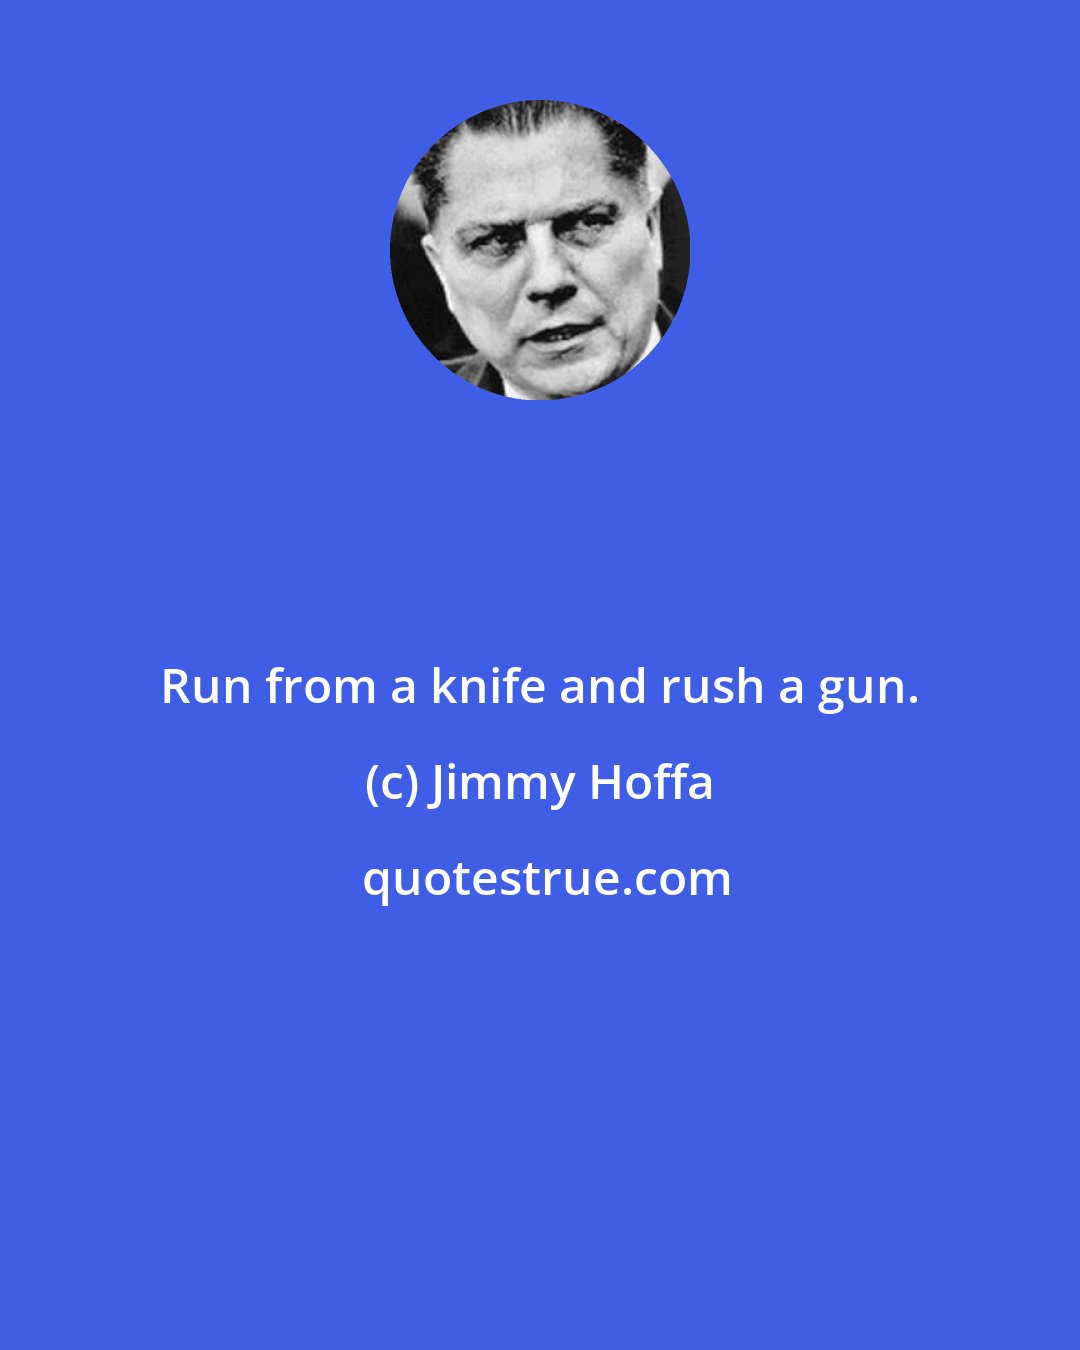 Jimmy Hoffa: Run from a knife and rush a gun.